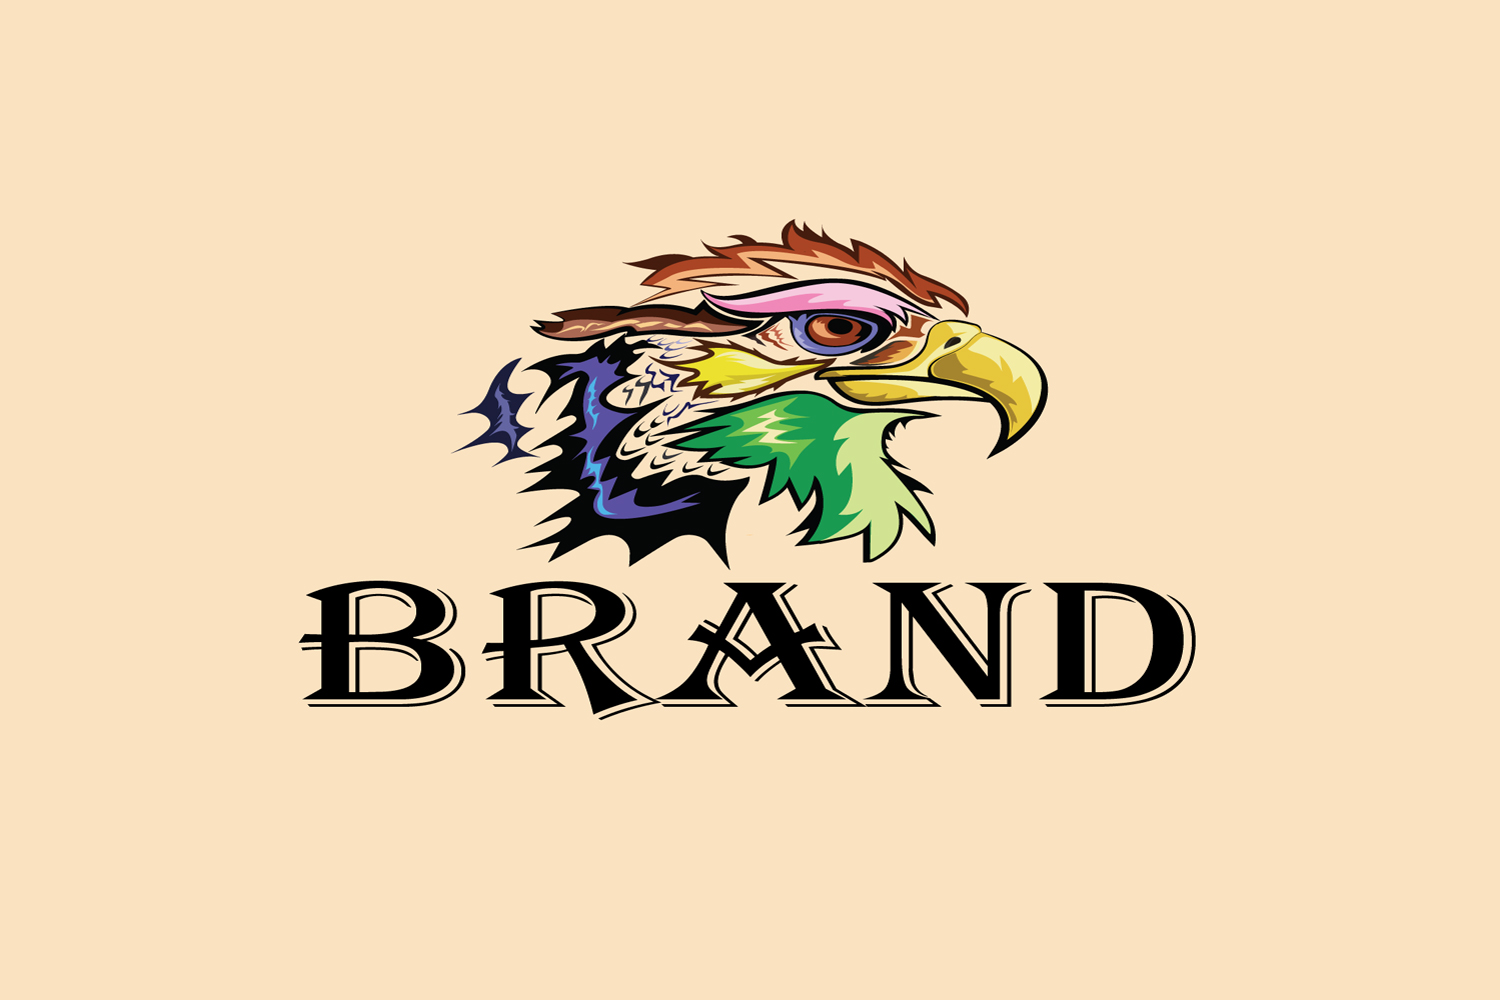 Eagle Logo pinterest preview image.